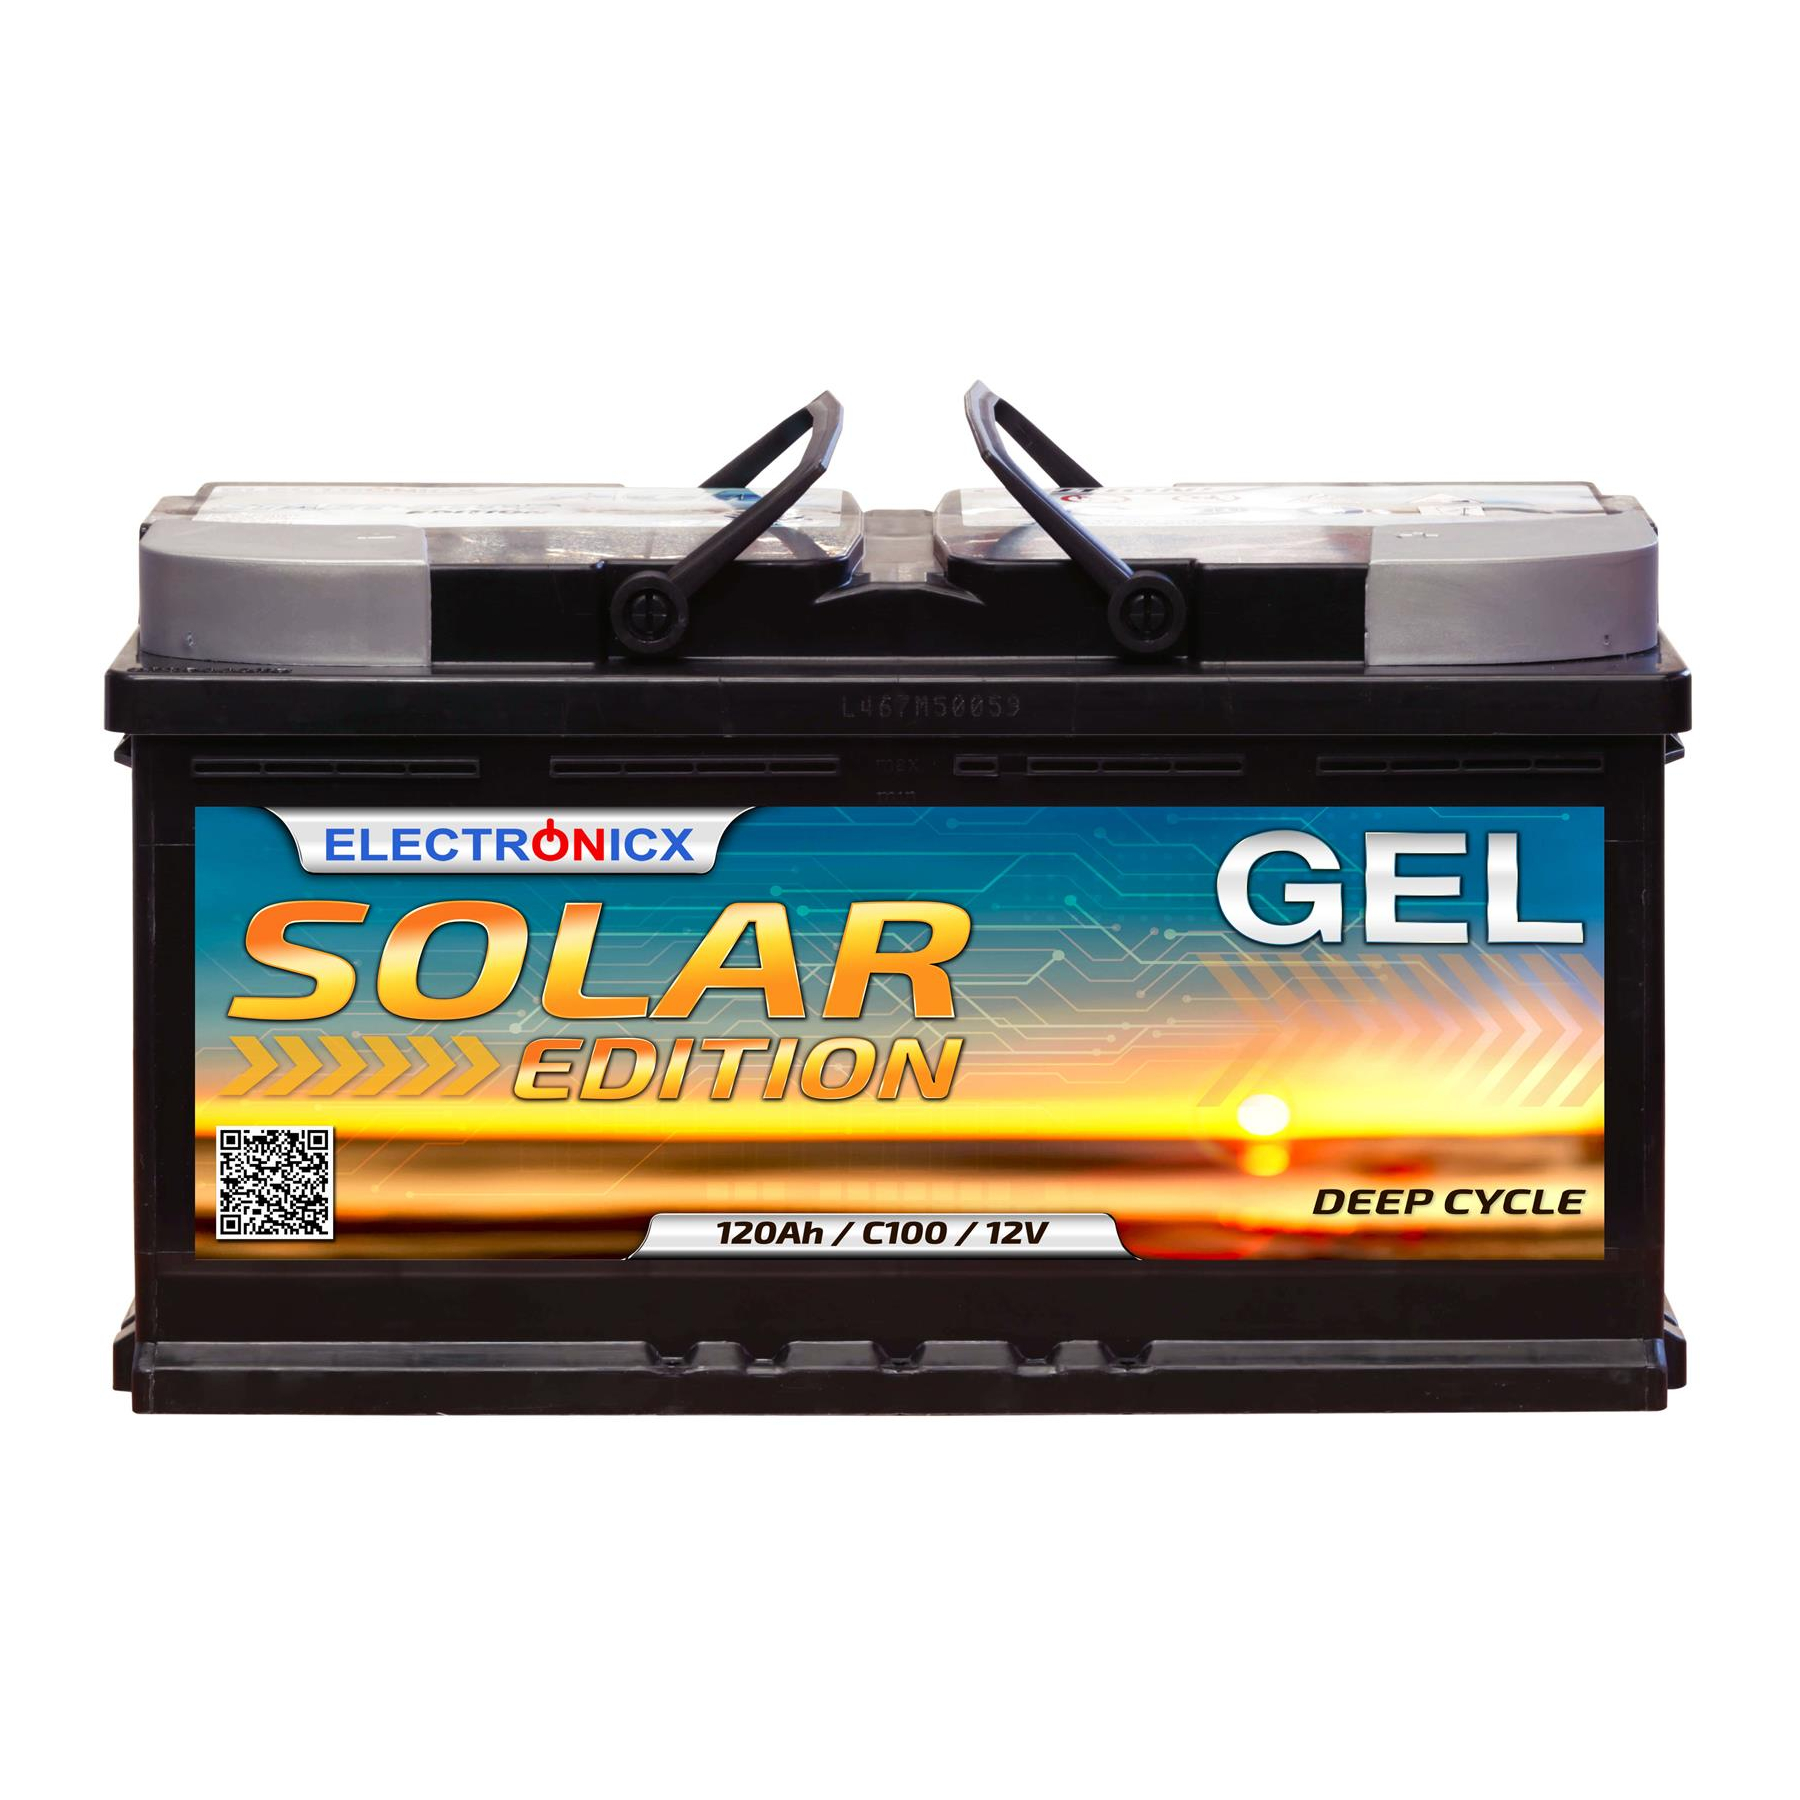 Edition 120 € 12V 169,99 Electronicx Solar, Batterie AH Solar Gel